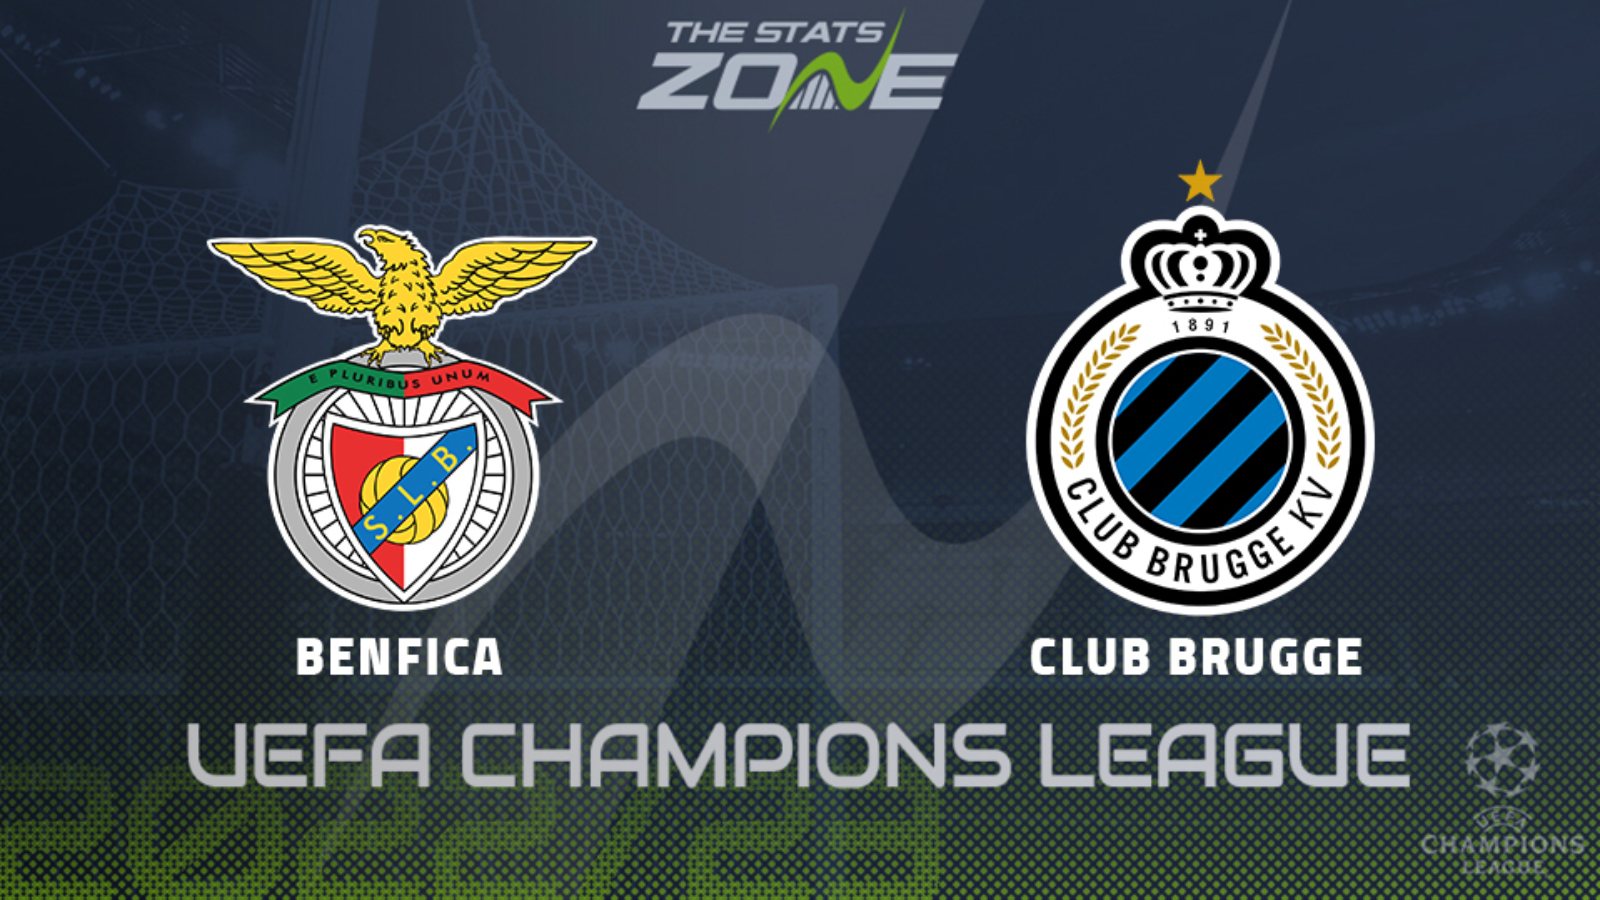 Champions League: Club Brugge vs Benfica